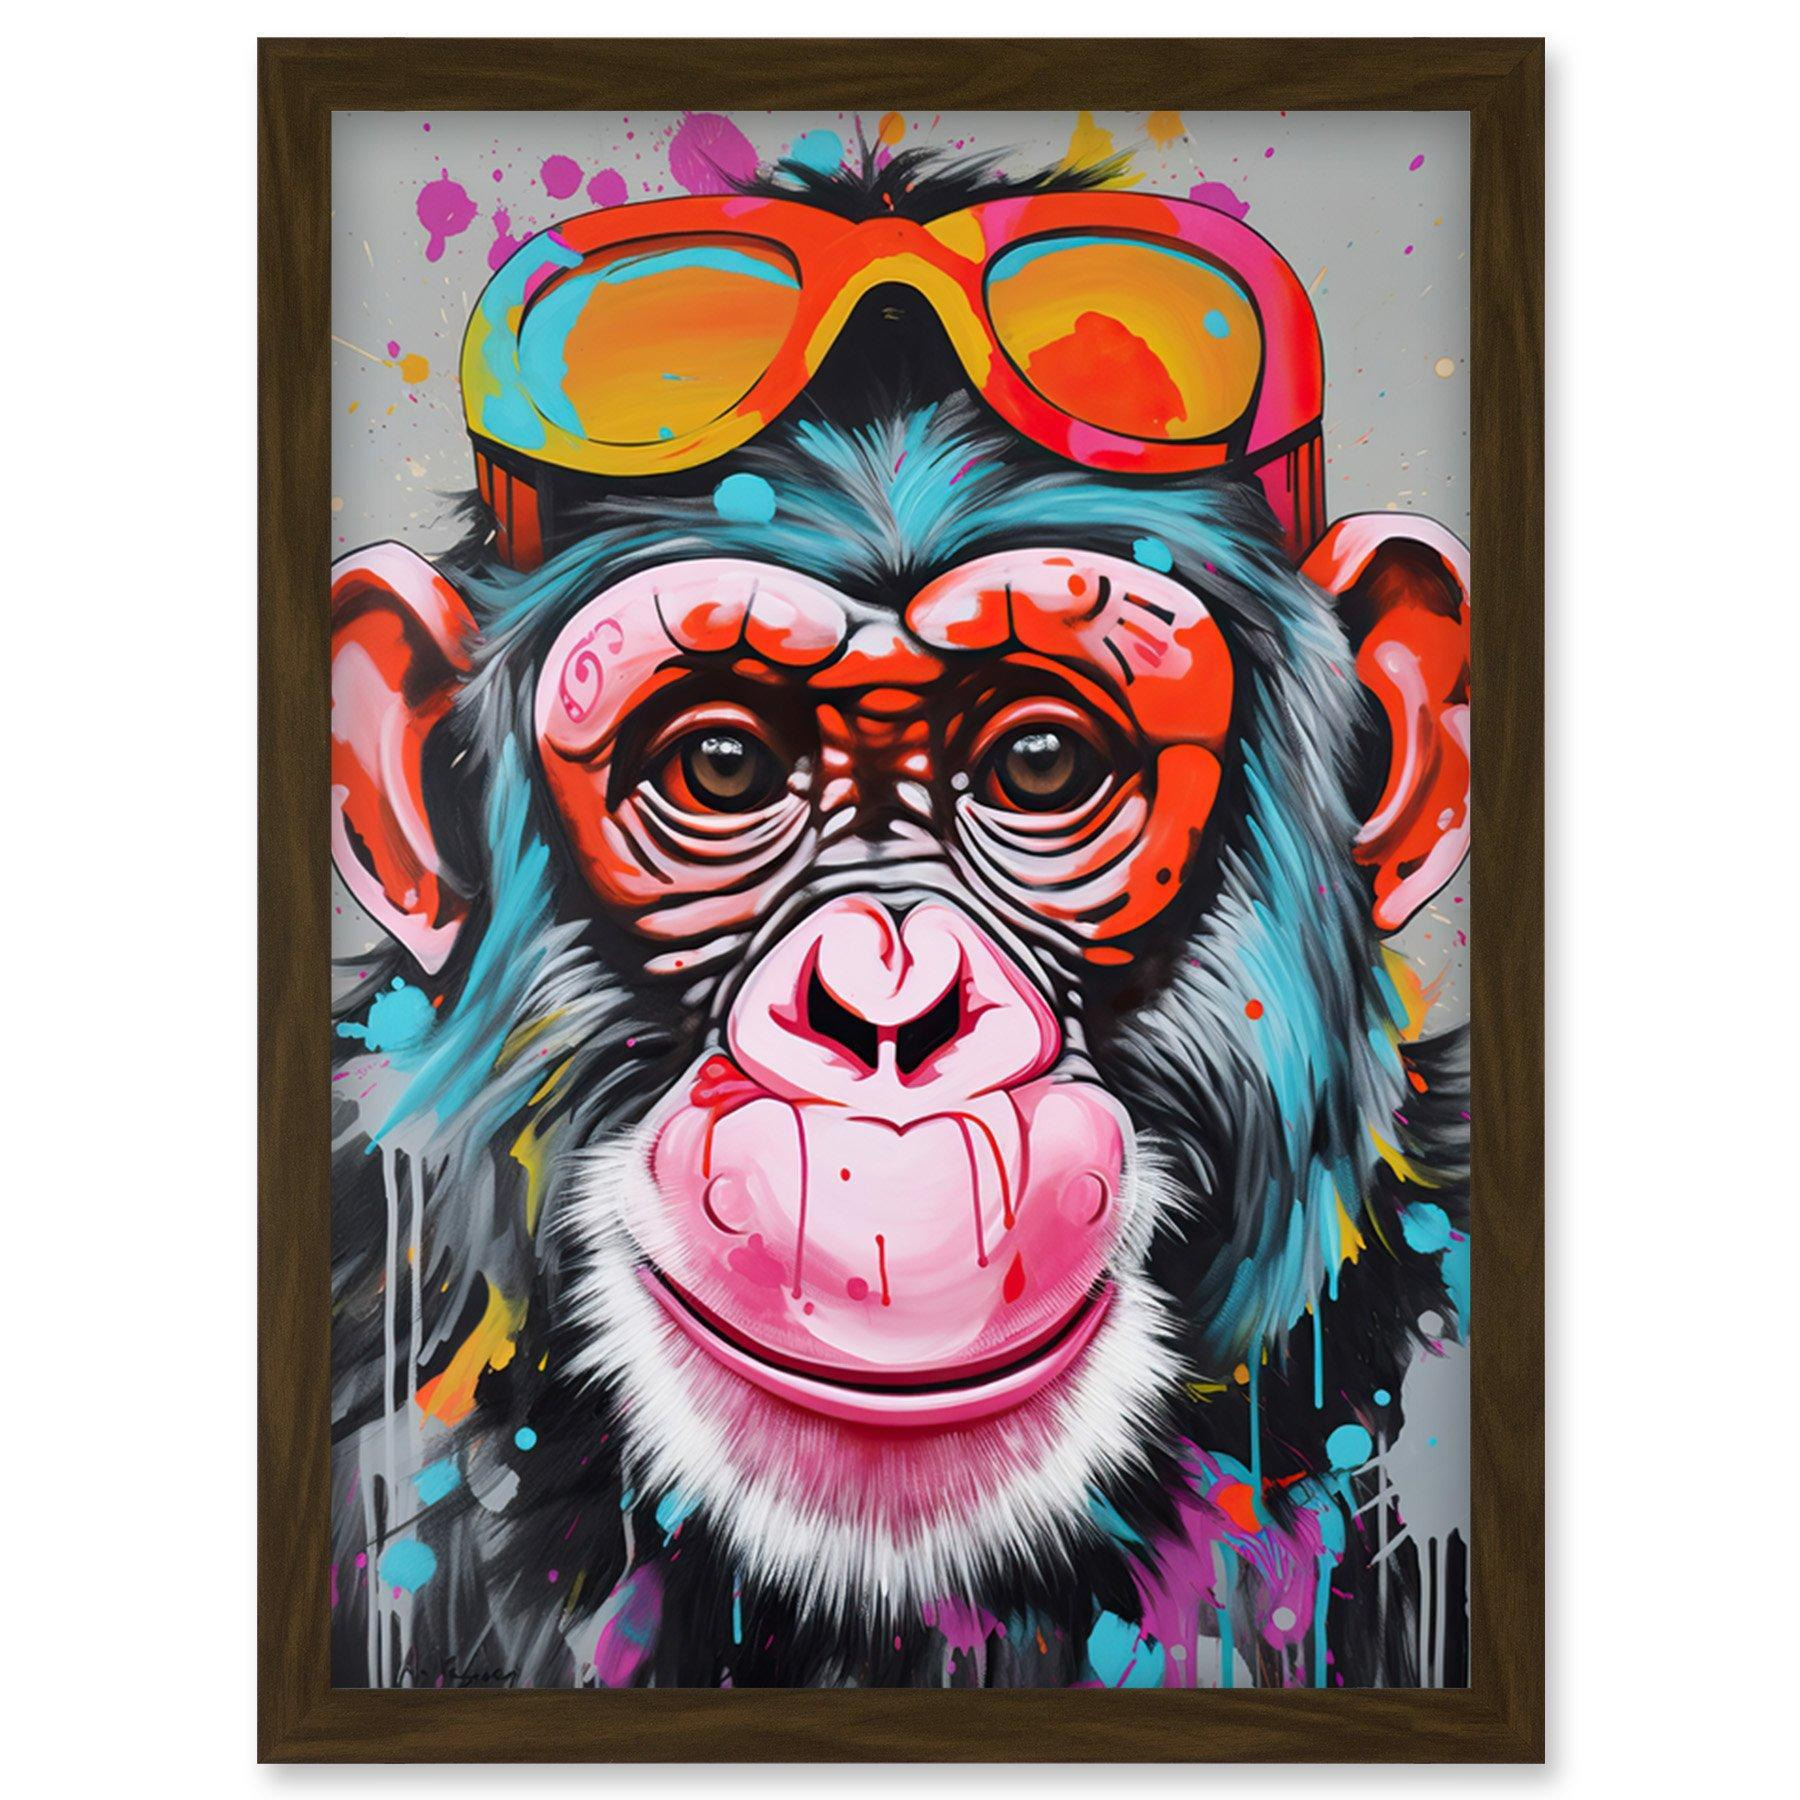 Chimpanzee Monkey With Sunglasses Graffiti Pop Art Artwork Framed Wall Art Print A4 - image 1